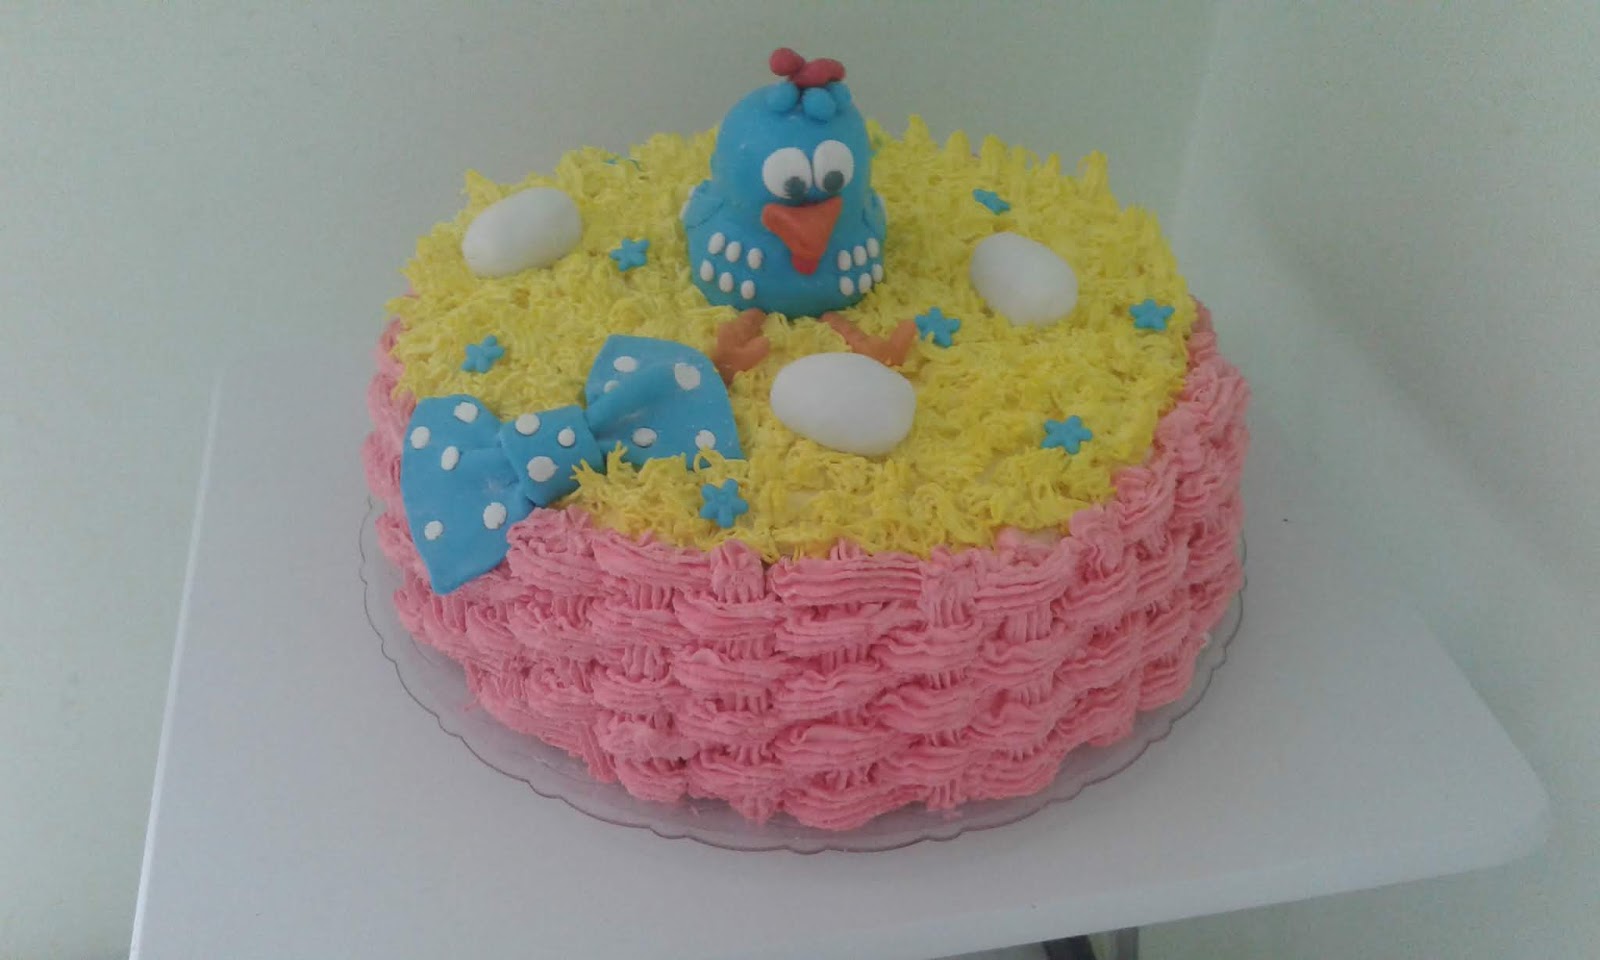 Cakes Michelle on X: Bolo e cupcakes decorados em chantilly com